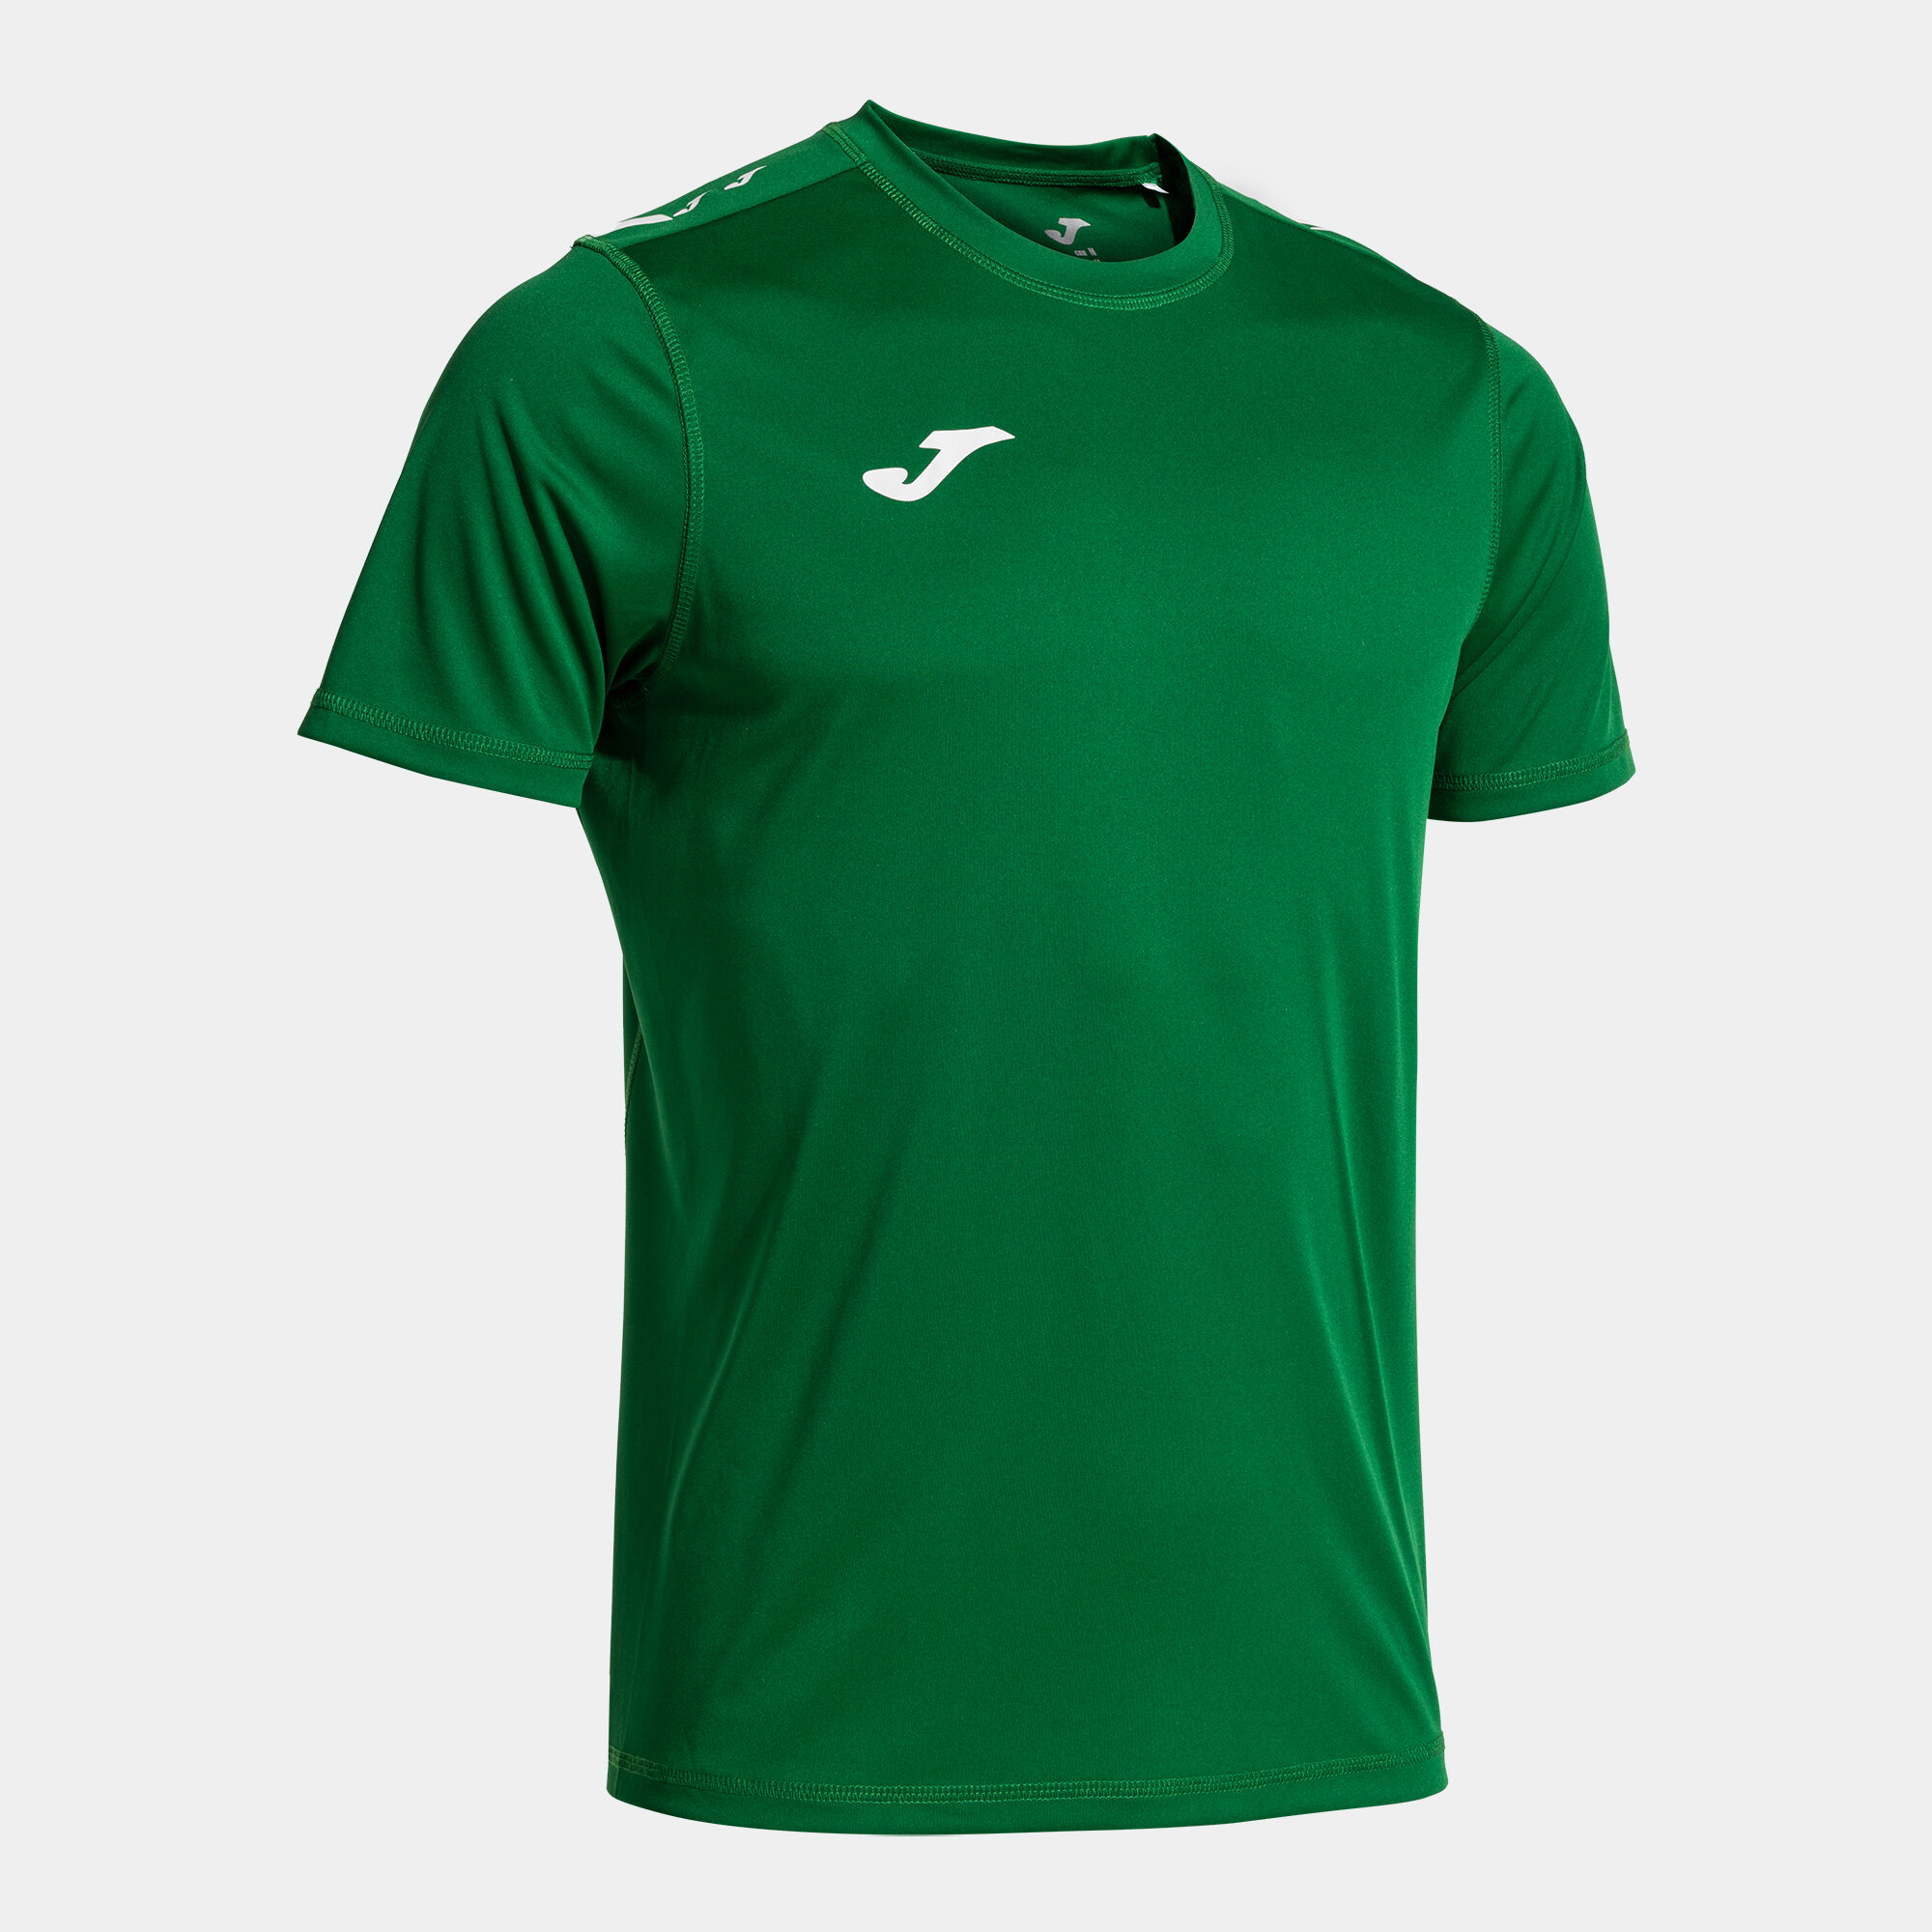 Camiseta manga corta hombre Olimpiada handball verde